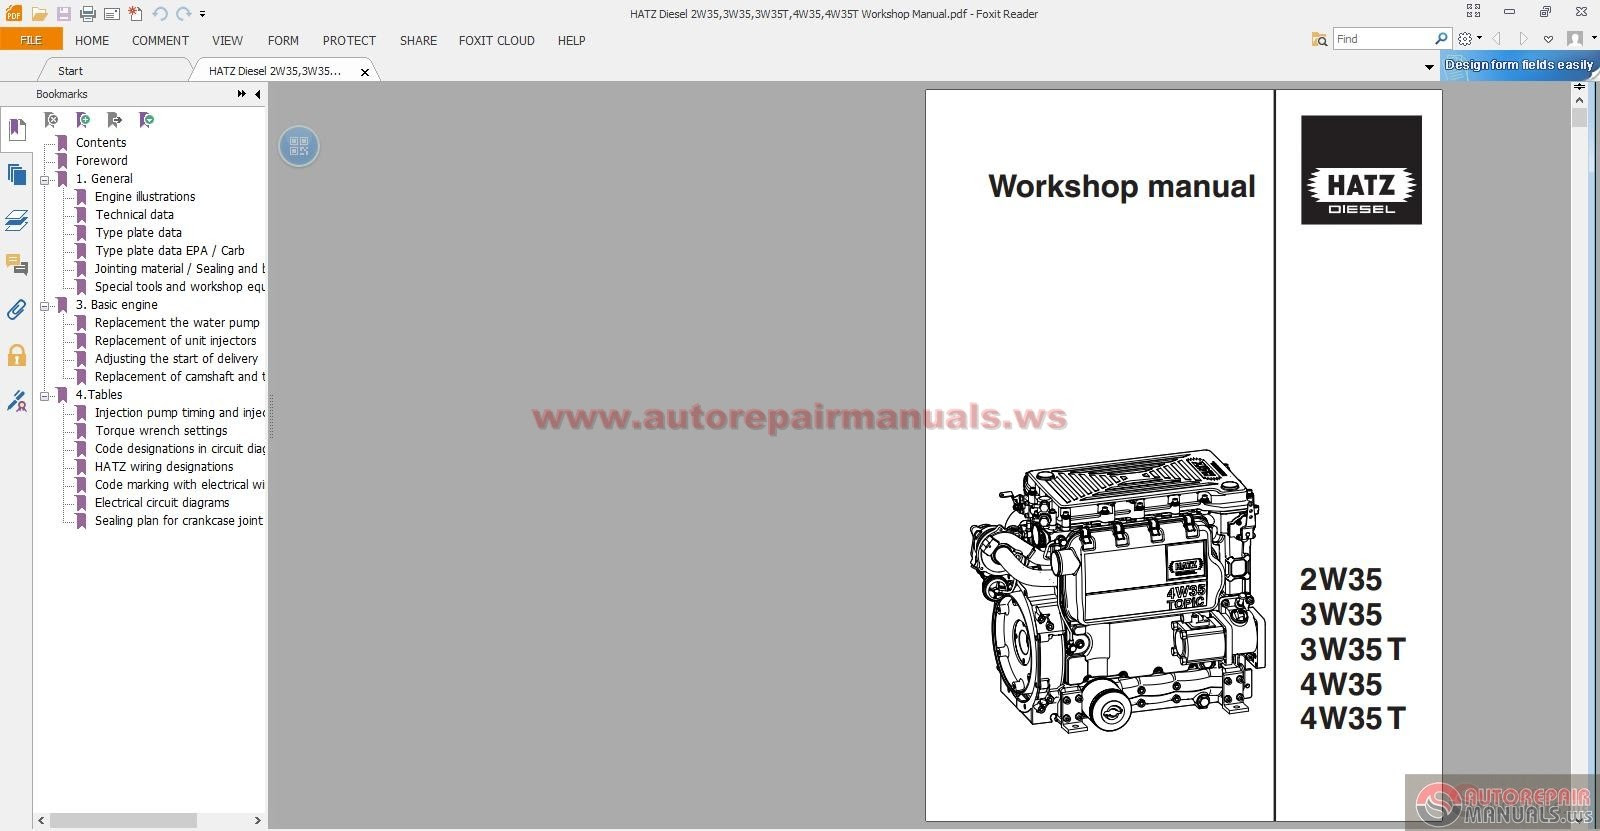 HATZ Diesel 2W35,3W35,3W35T,4W35,4W35T Workshop Manual ...